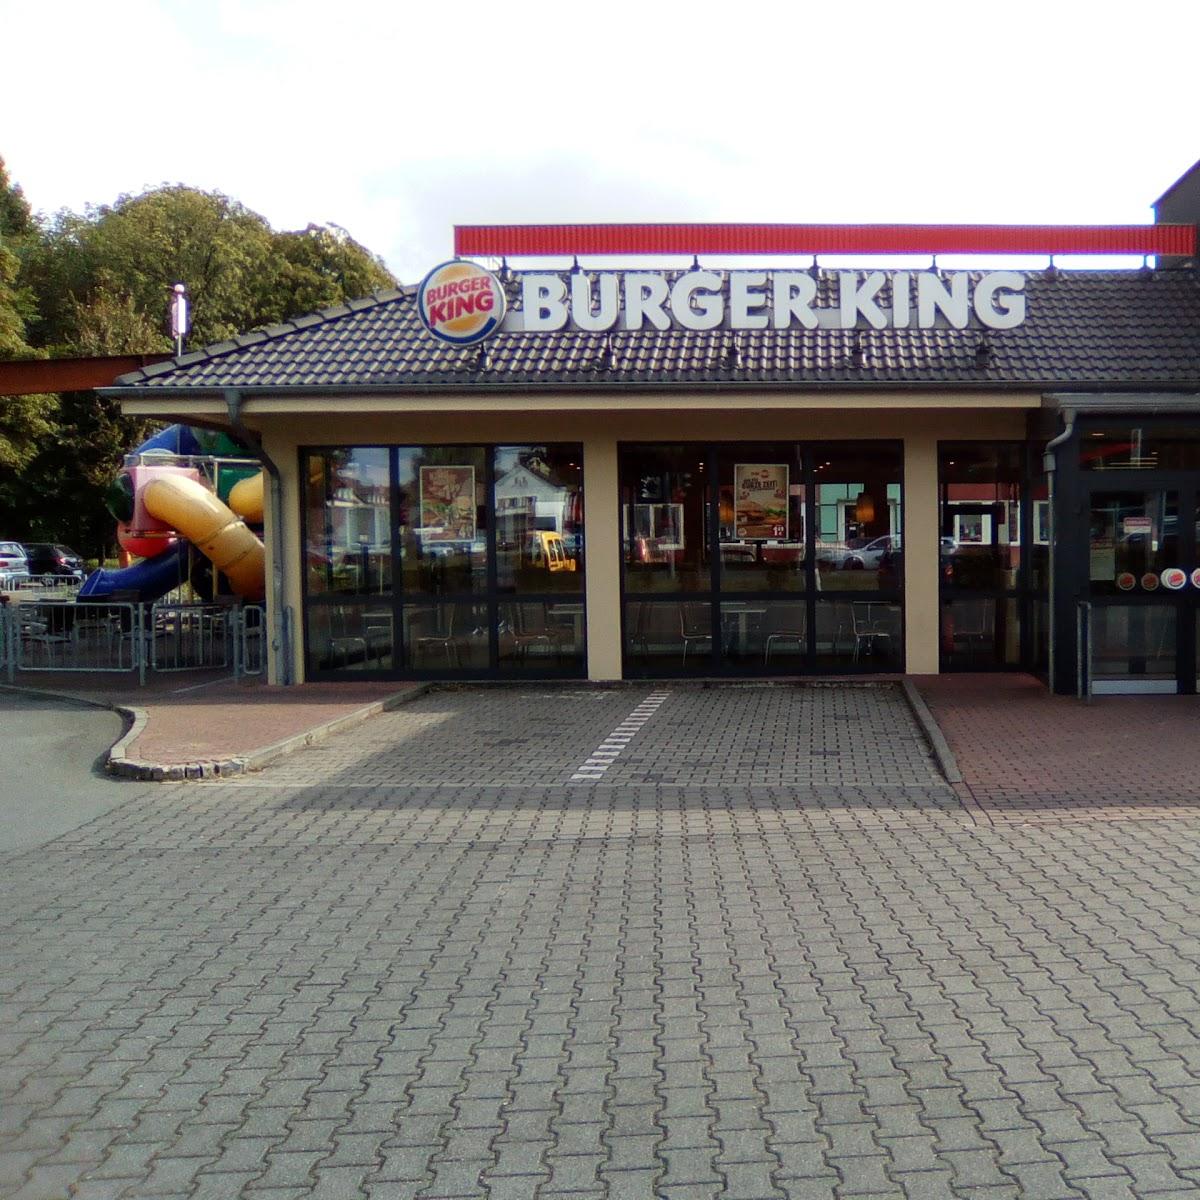 Restaurant "Burger King" in Dorsten